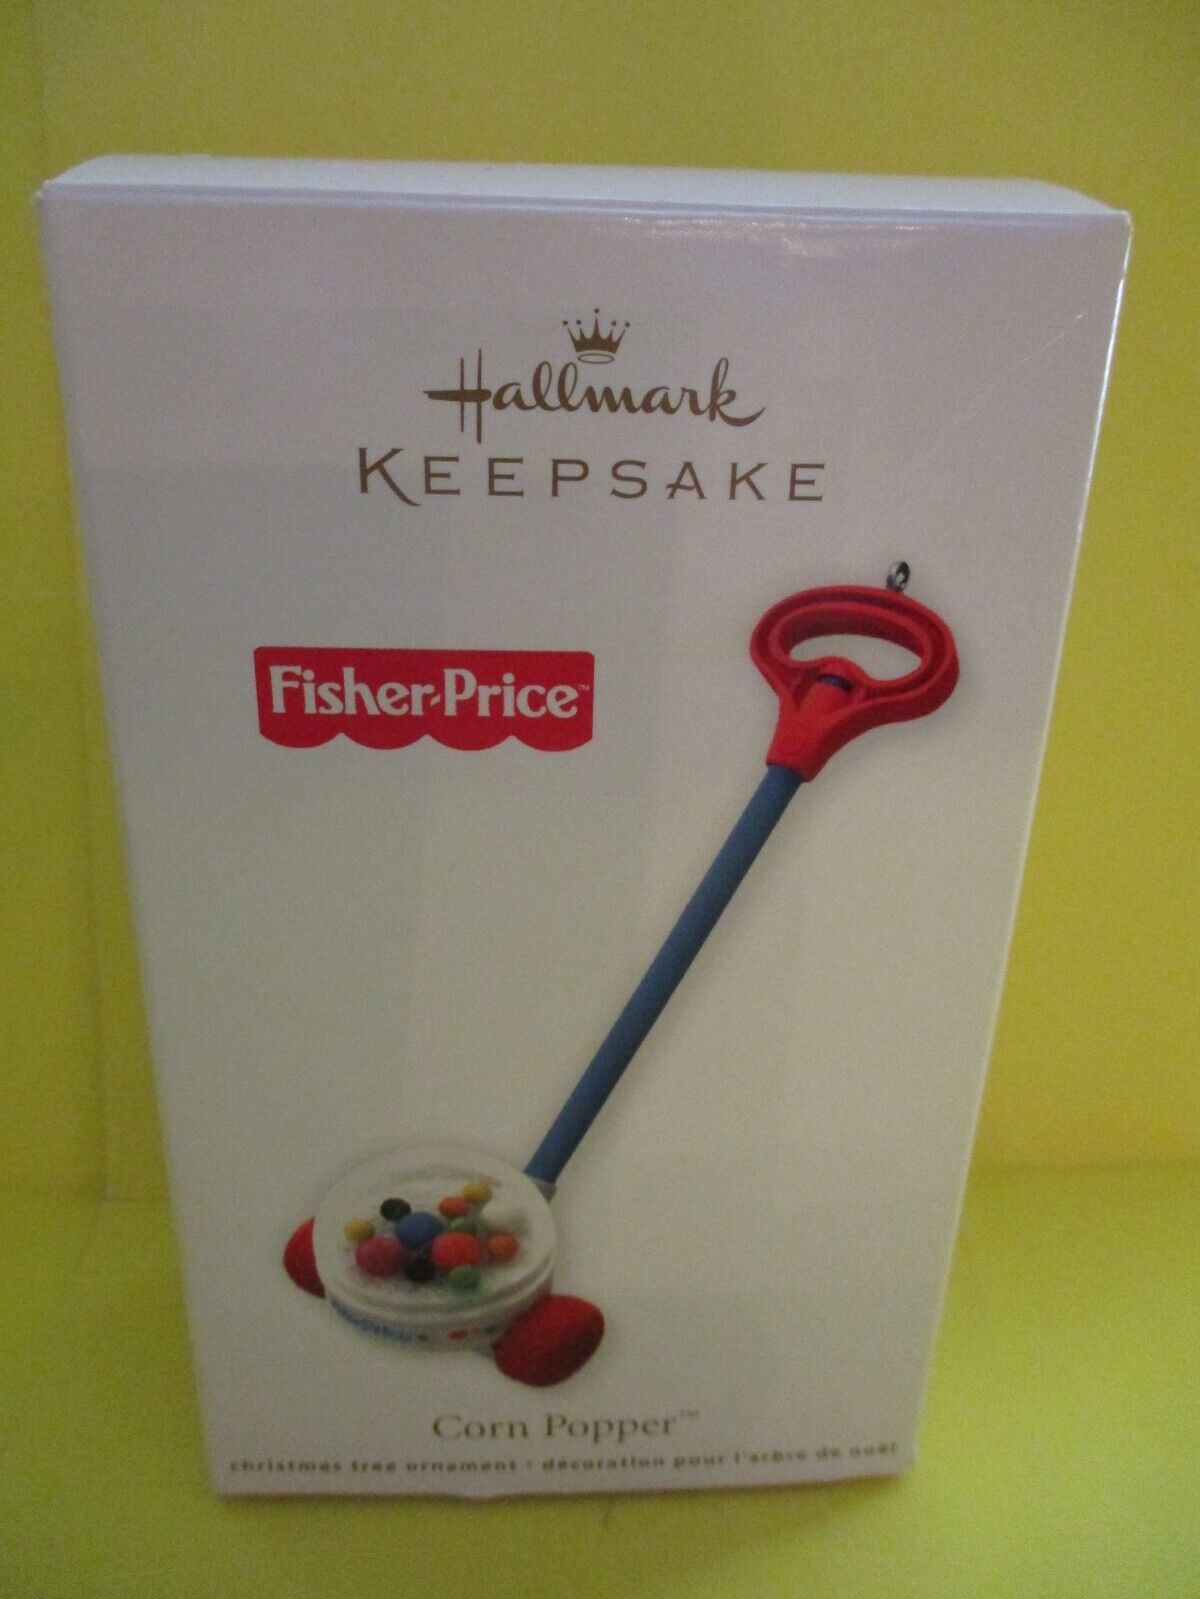 2012 Hallmark Fisher-Price Corn Popper Push to Hear See Pop New but Damaged Box